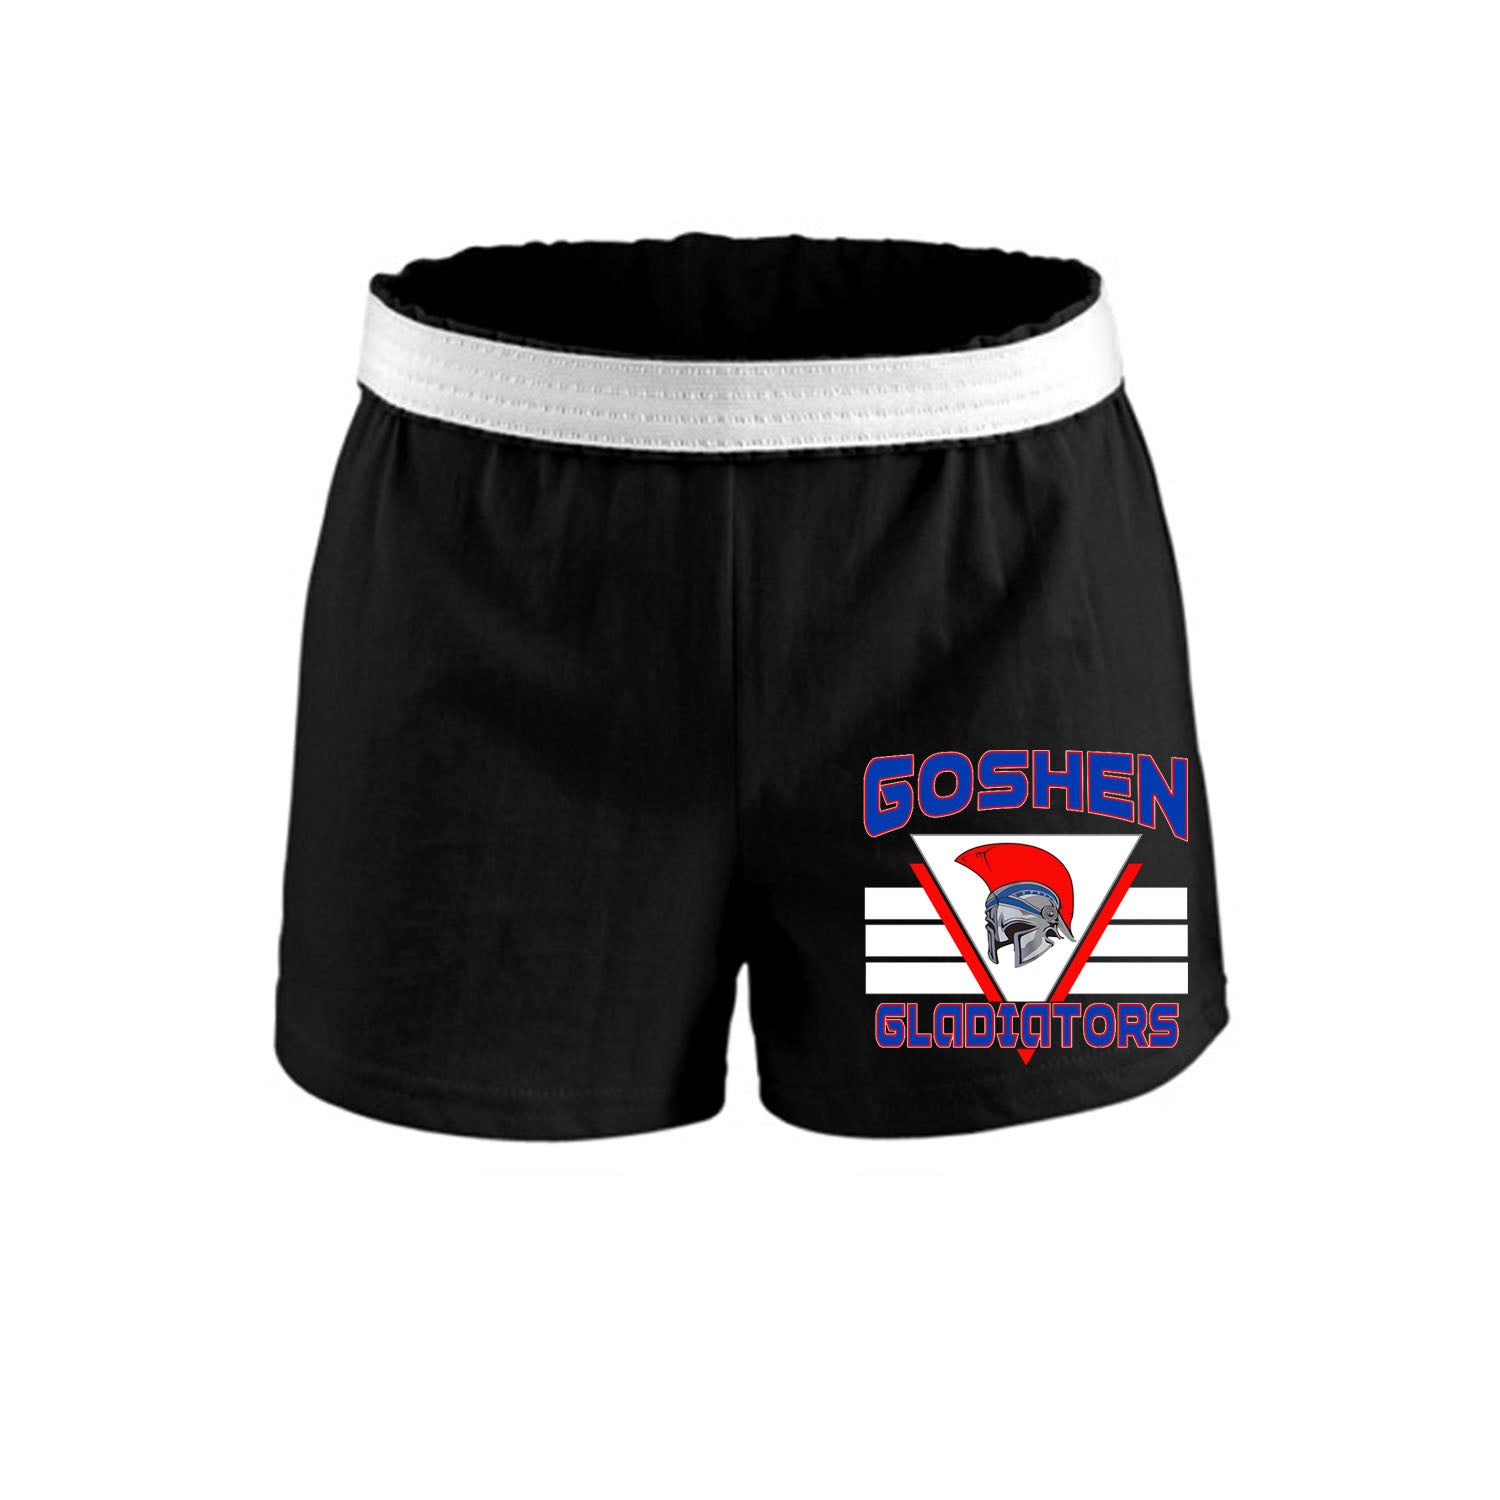 Goshen School Design 2 Shorts